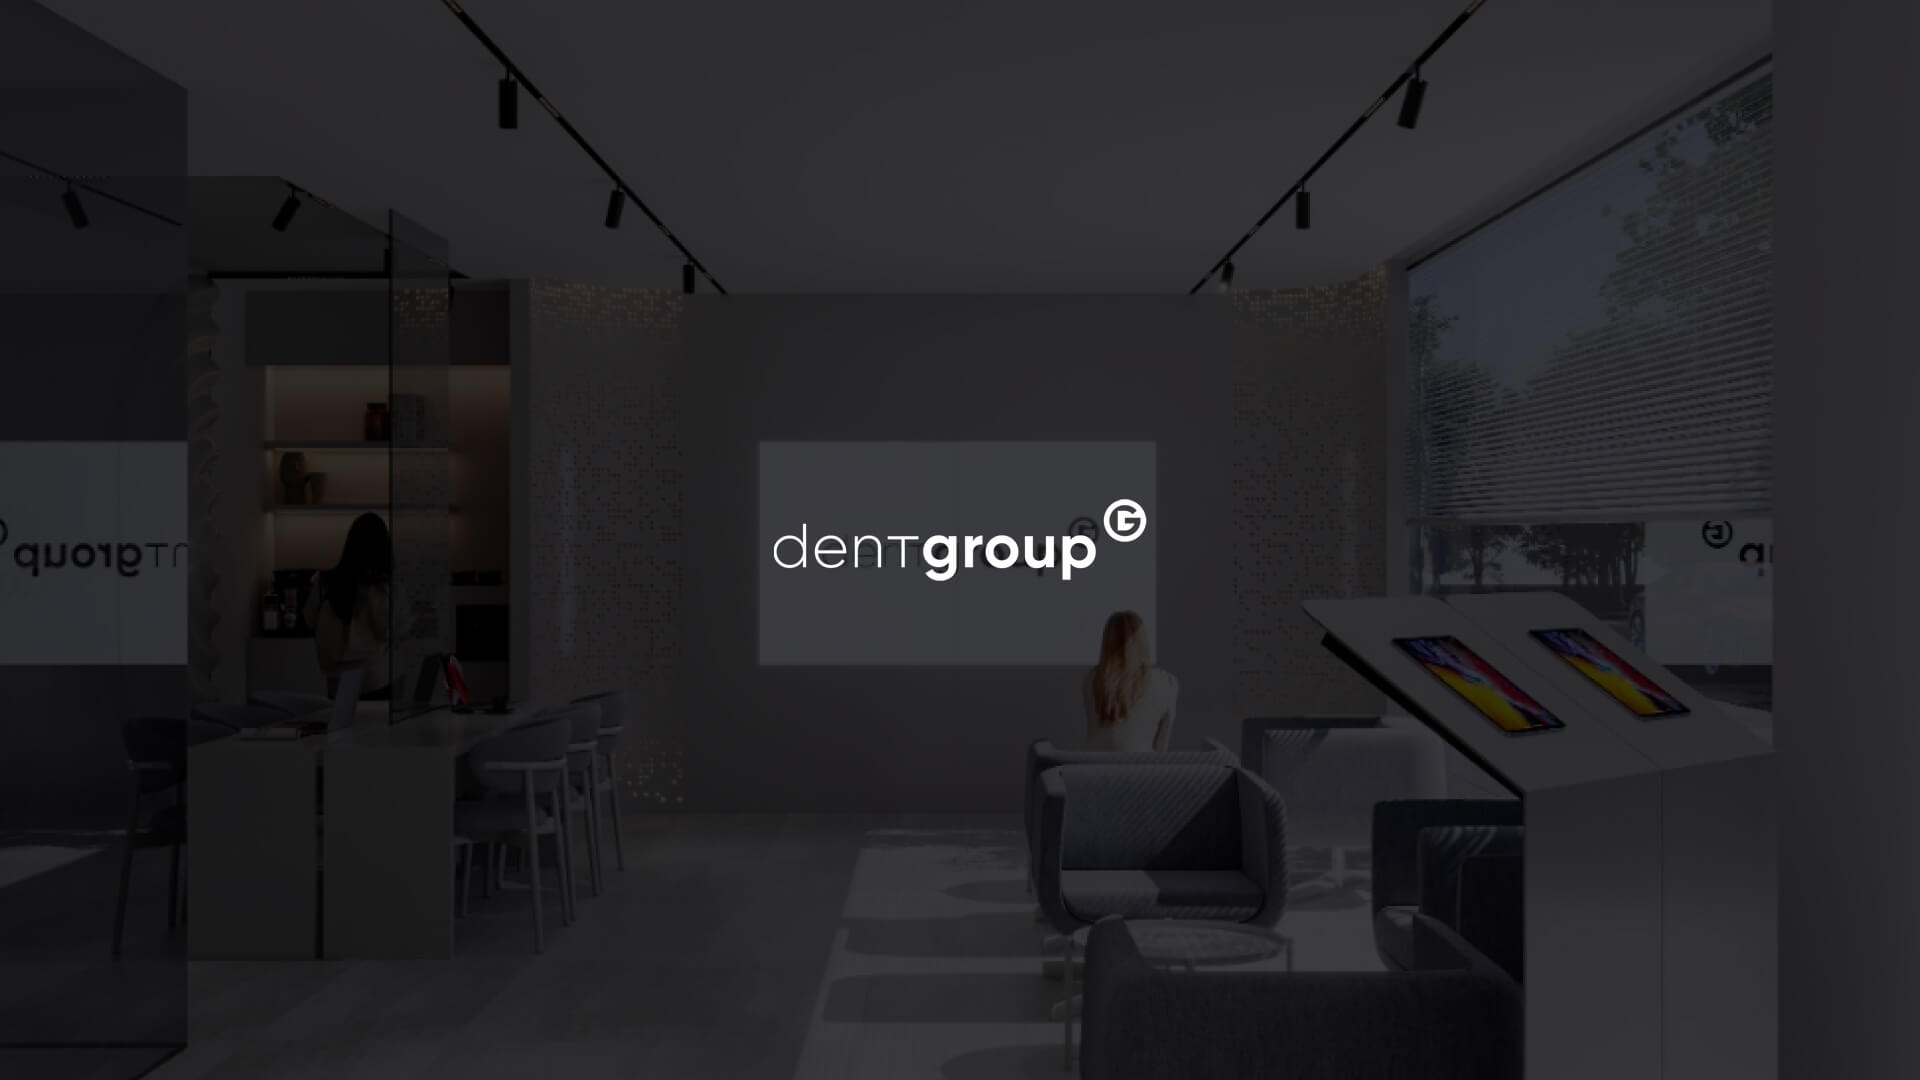 Dent Group